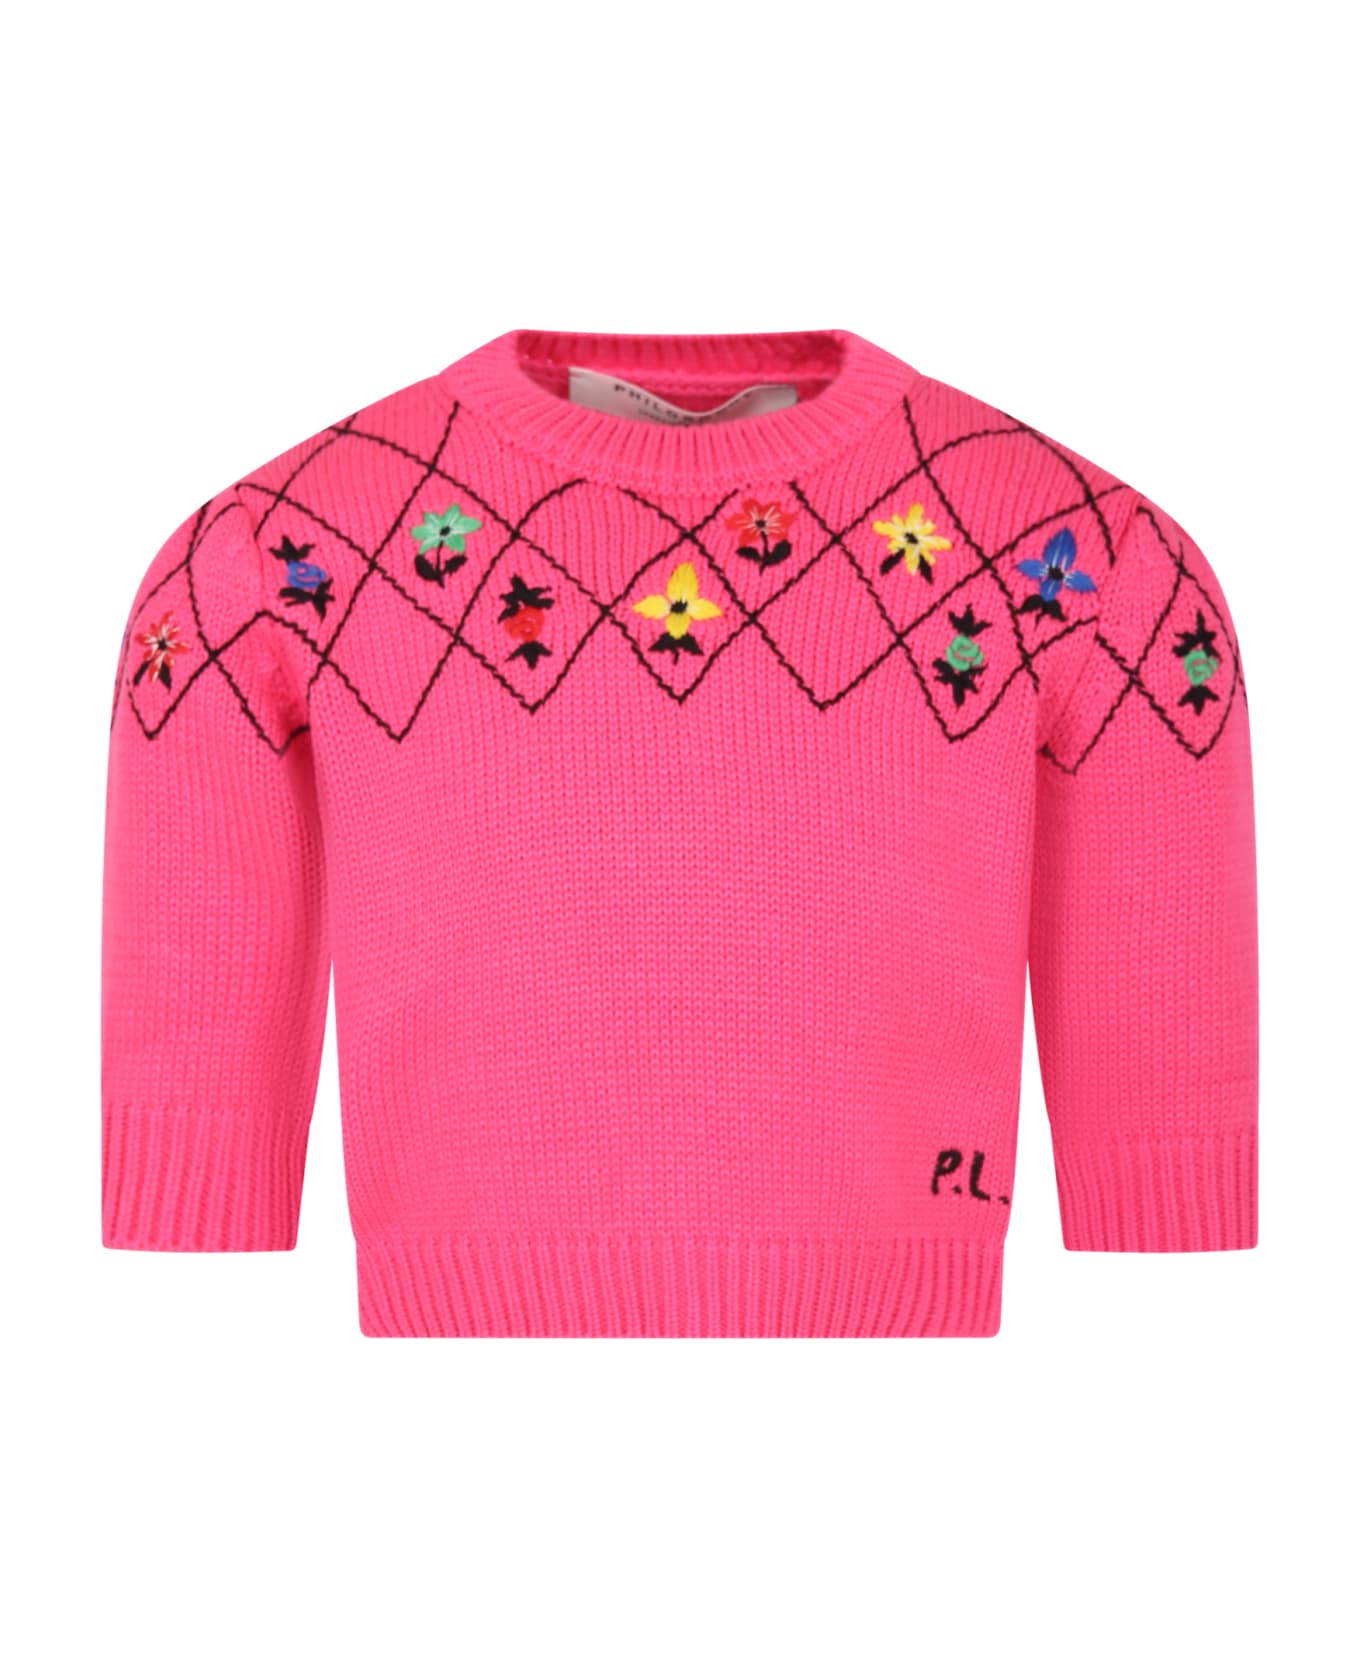 Philosophy di Lorenzo Serafini Kids Fuchsia Sweater For Girl With Embroidered Flowers - Fuchsia